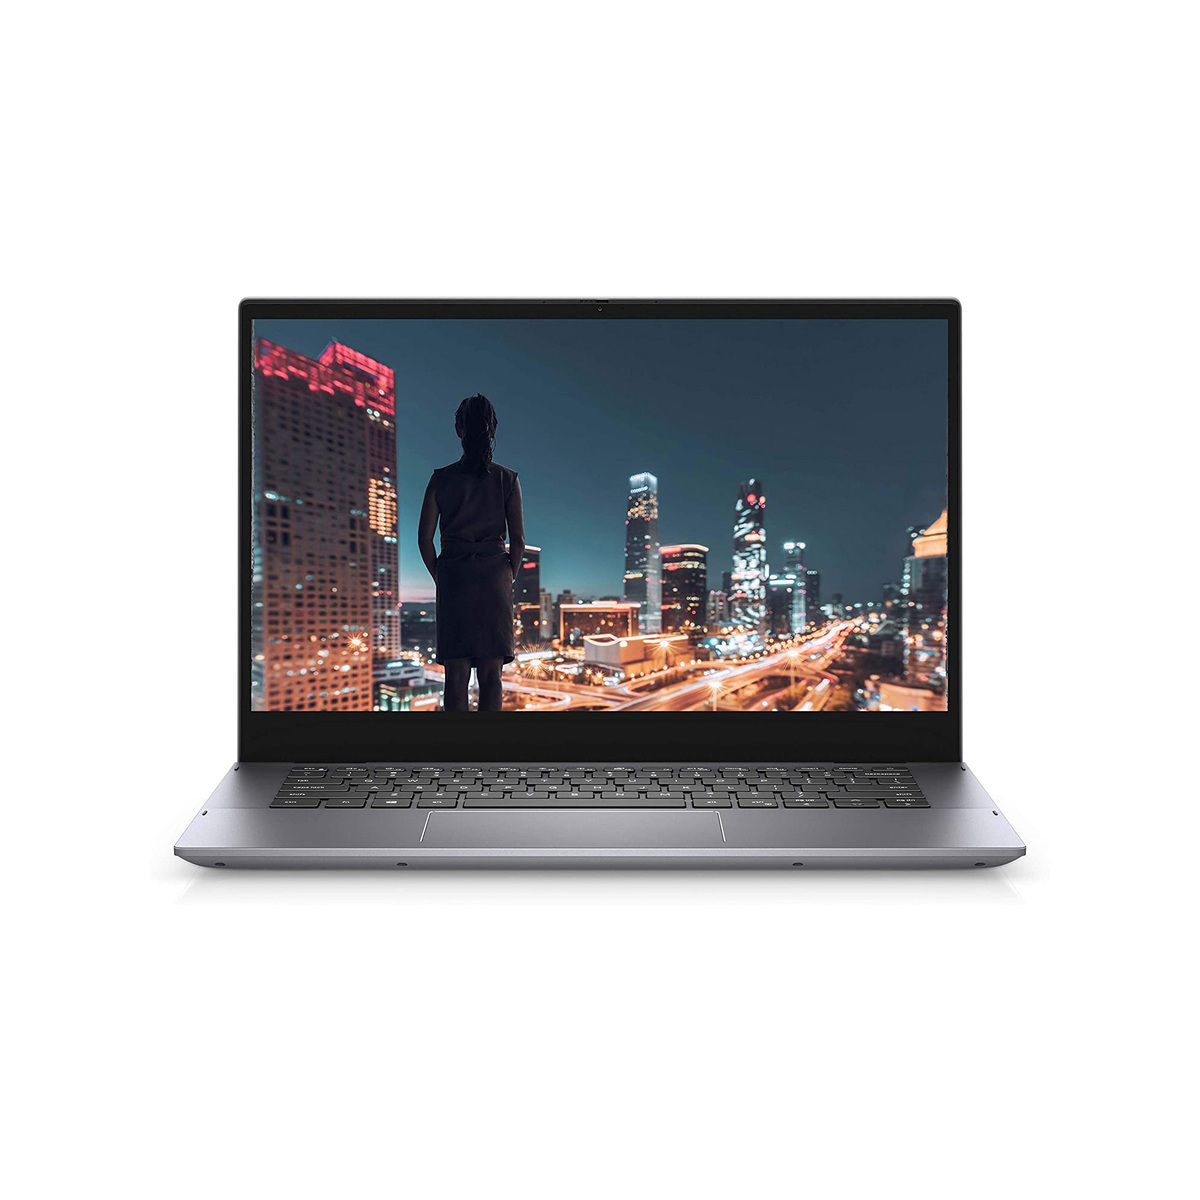 Dell Inspiron 14 5400 2-in-1 Touchscreen Convertible Laptop (5400-INS 5046B) Intel Core i3-1005G1 10th Gen,4GB RAM,256GB SSD, Windows 10,Titan Grey-Metal